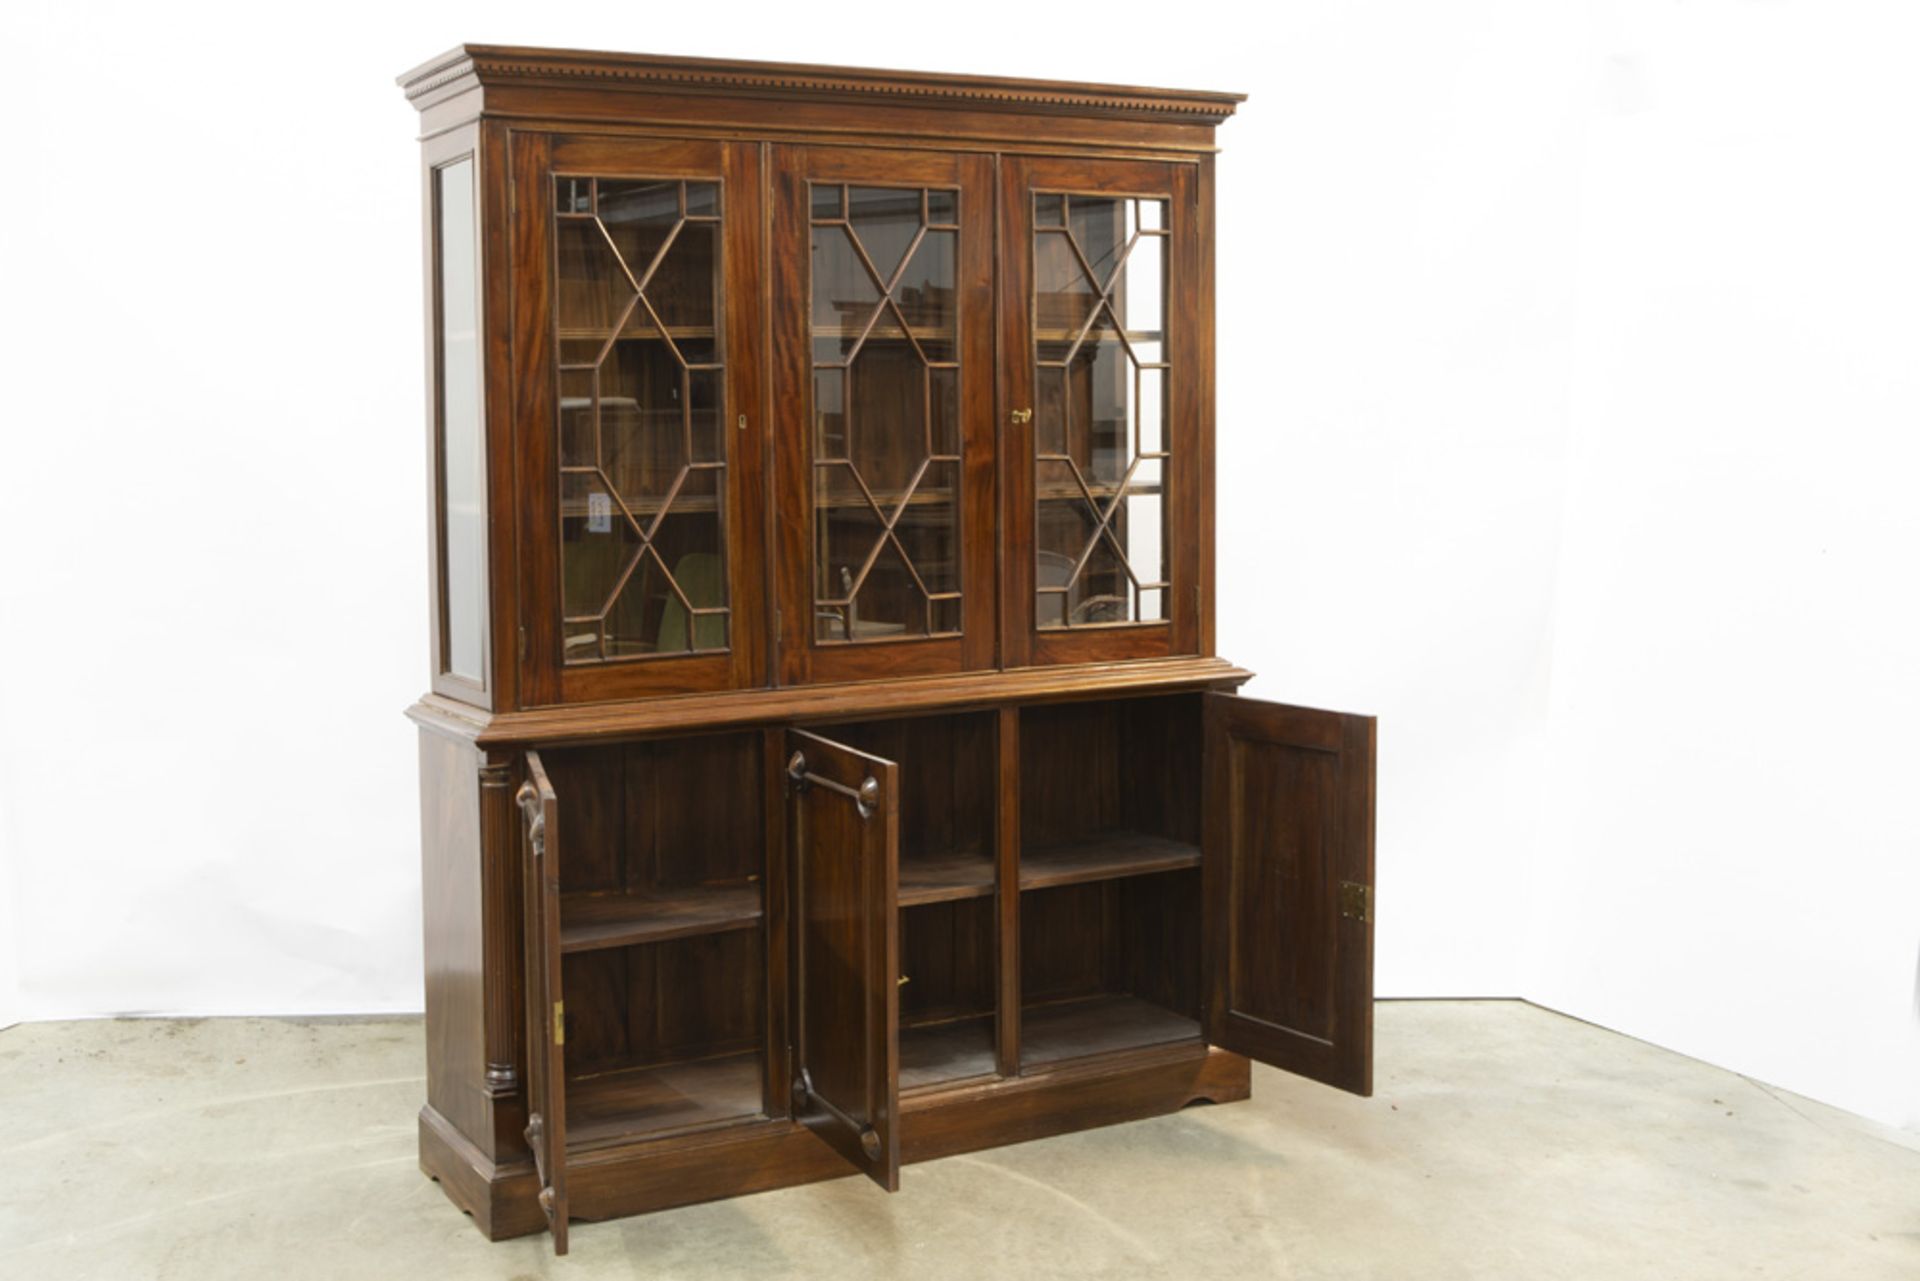 small library bookcase in mahogany || Klein bibliotheekmeubel in acajou met onderaan drie deuren - Image 2 of 2